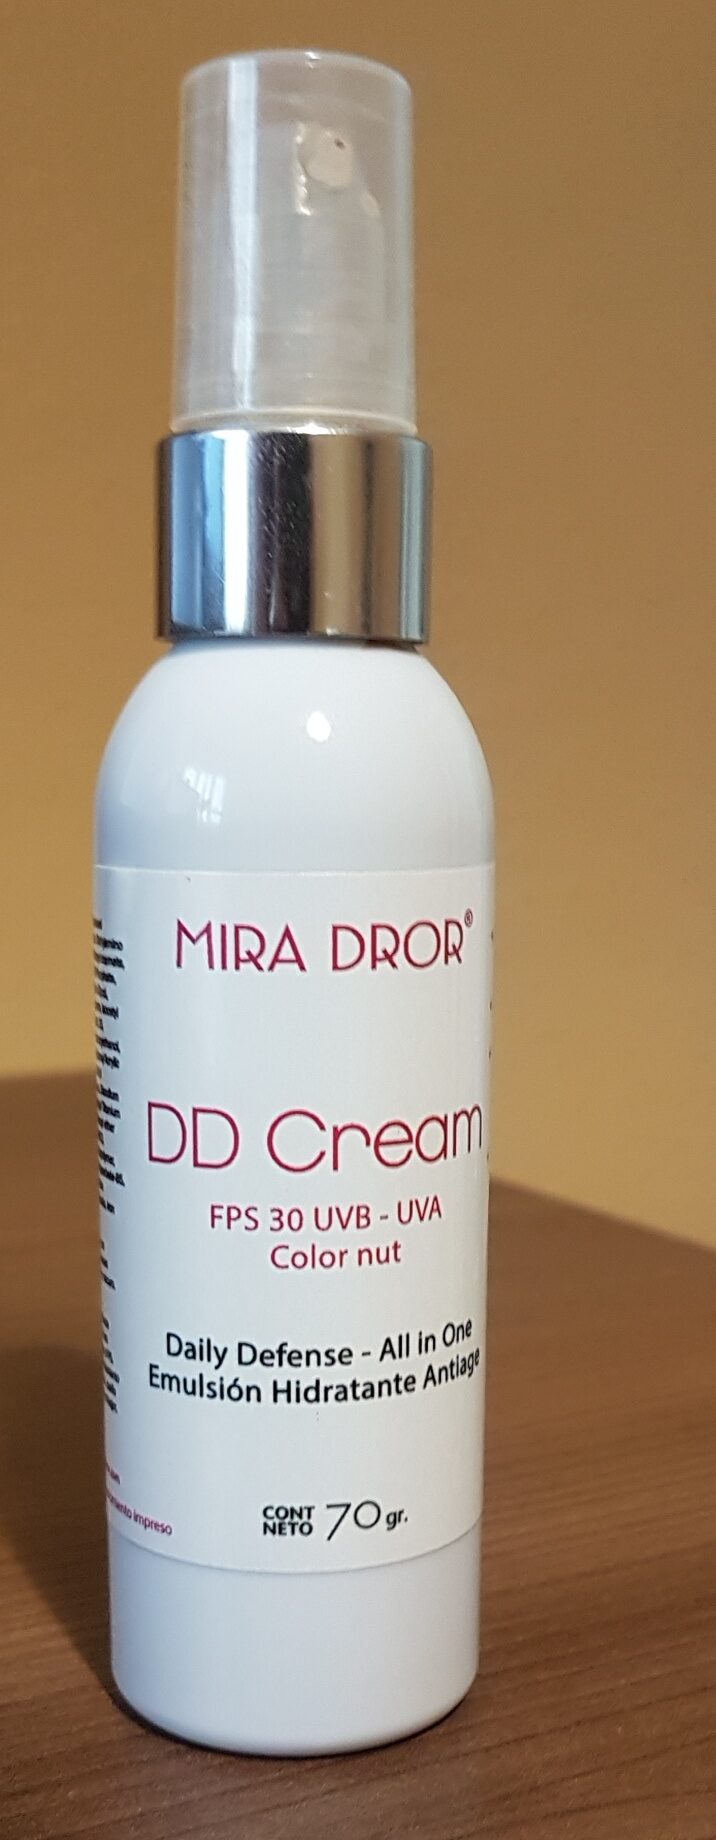 DD Cream and sunscreen - Produit - en